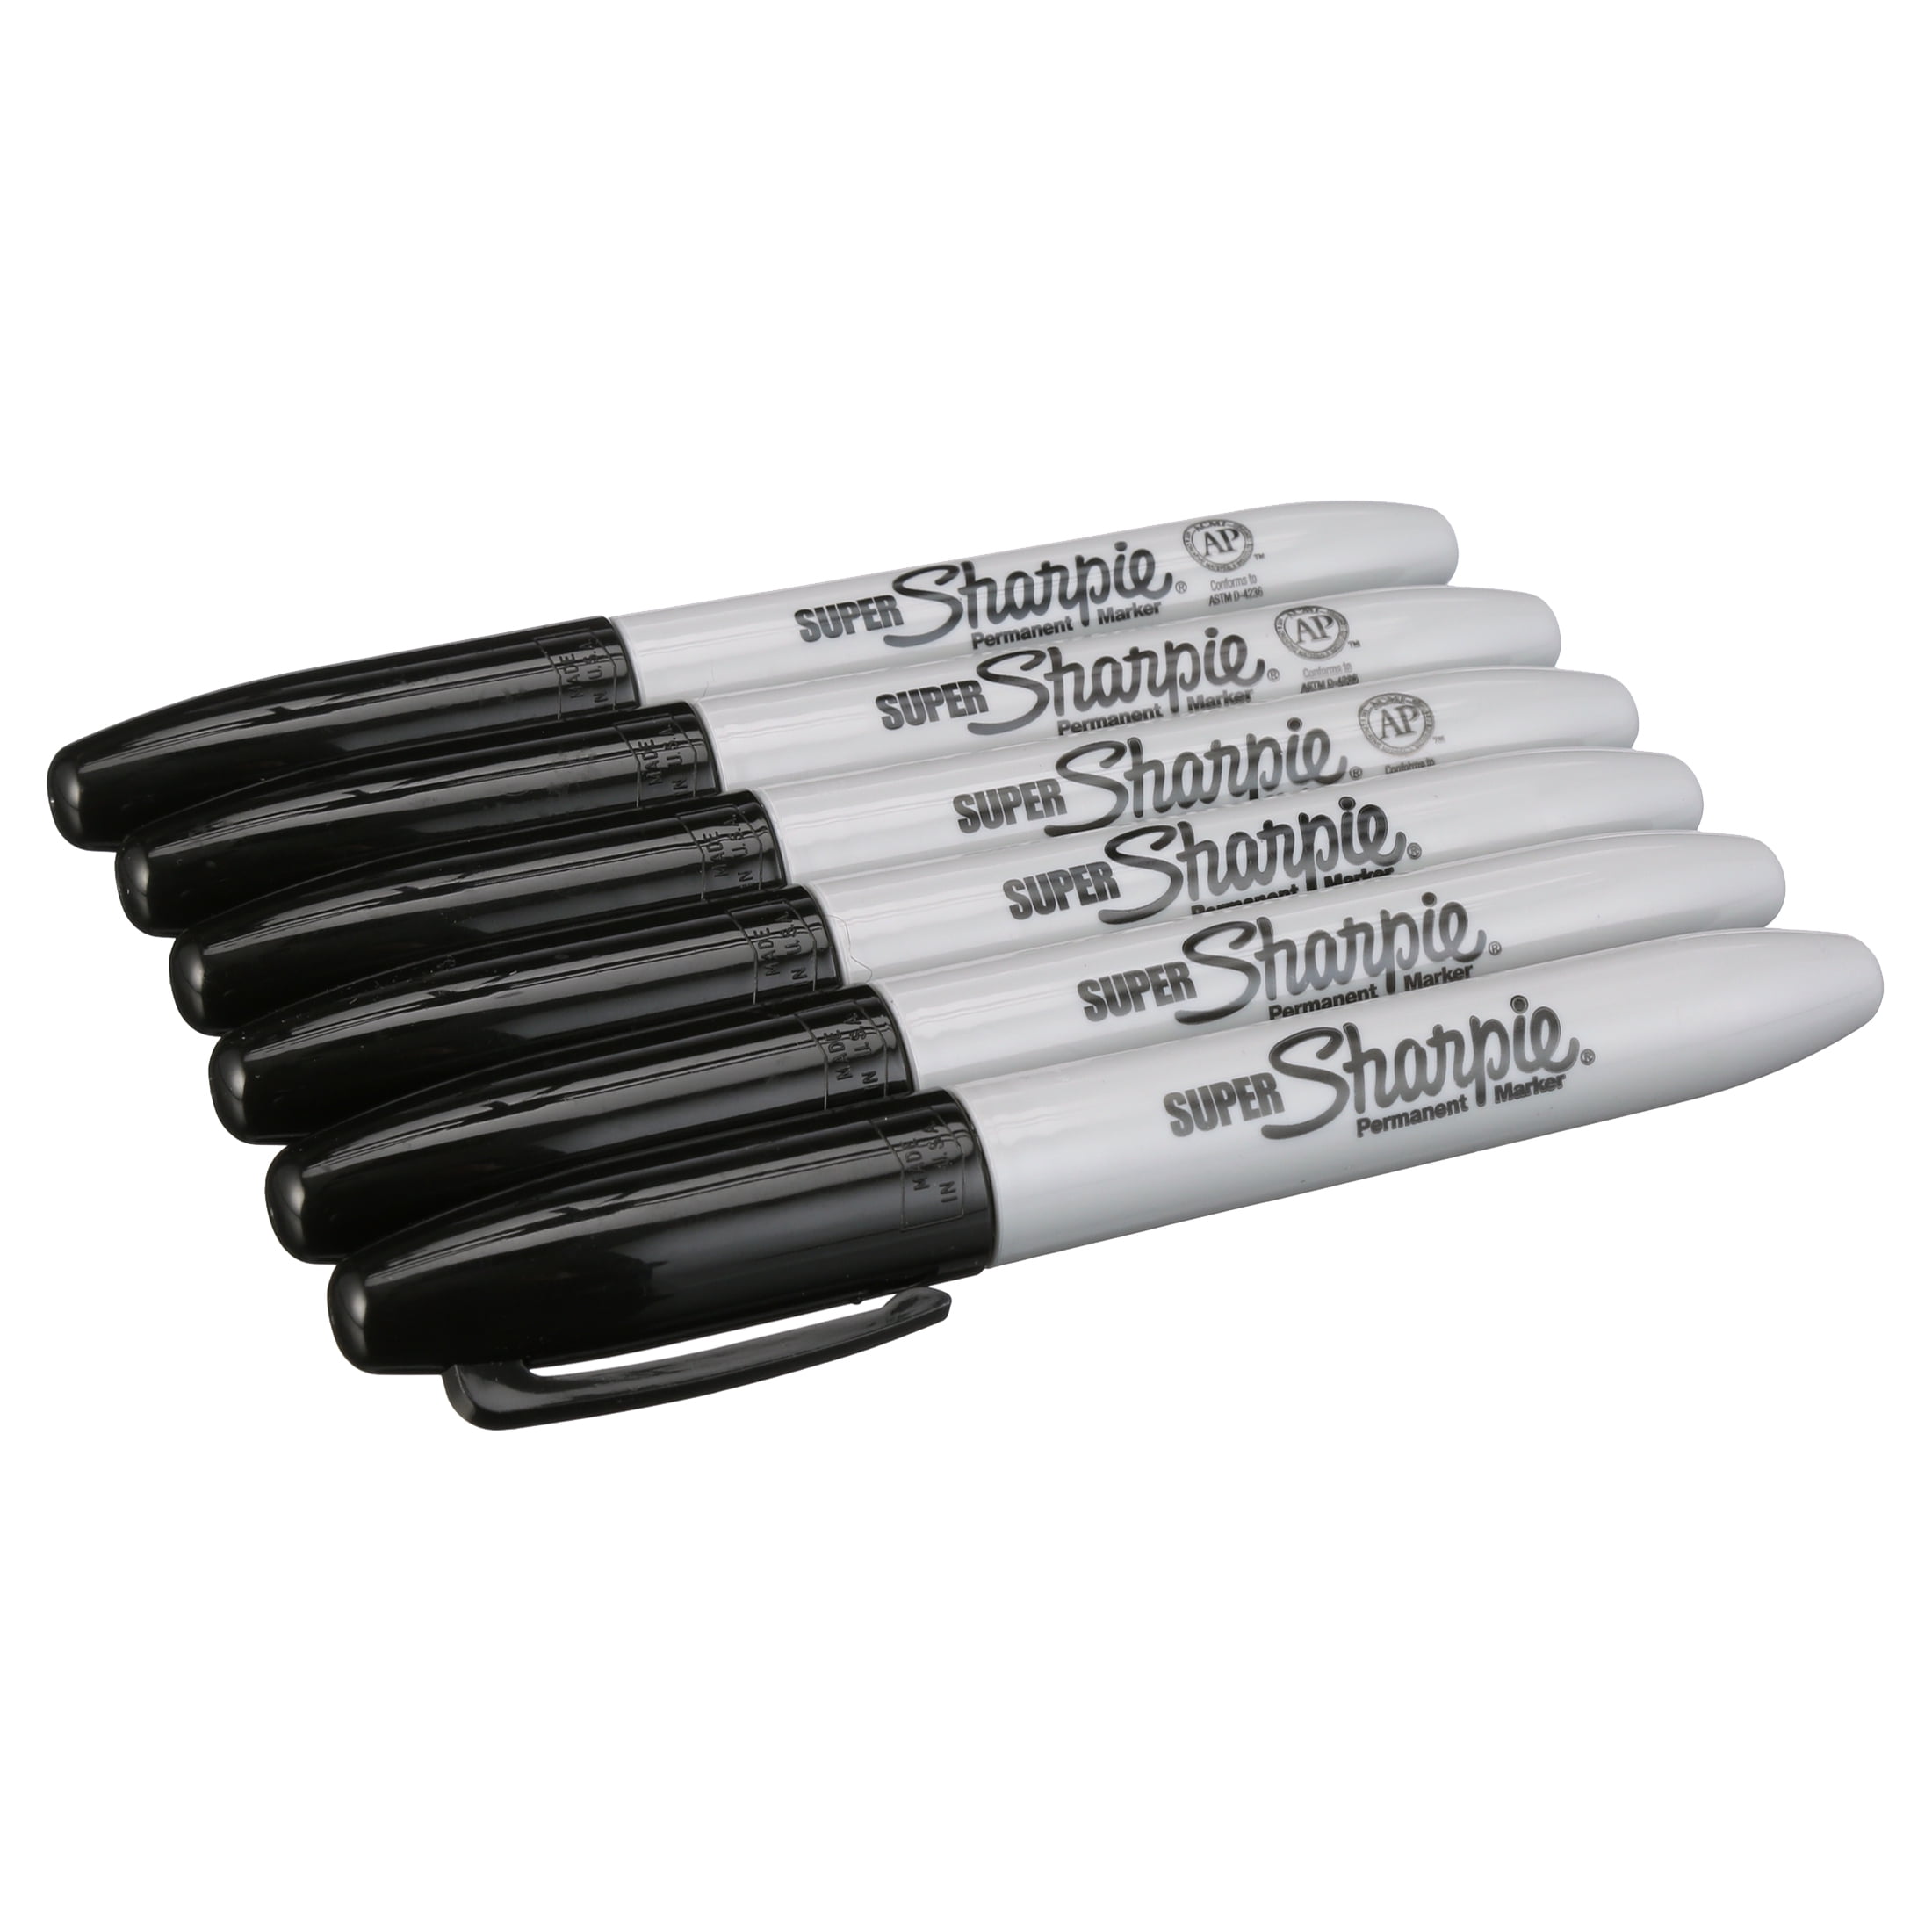 Super Sharpie Permanent Markers, Fine Point, Black, Box of 12 - SAN33001BX